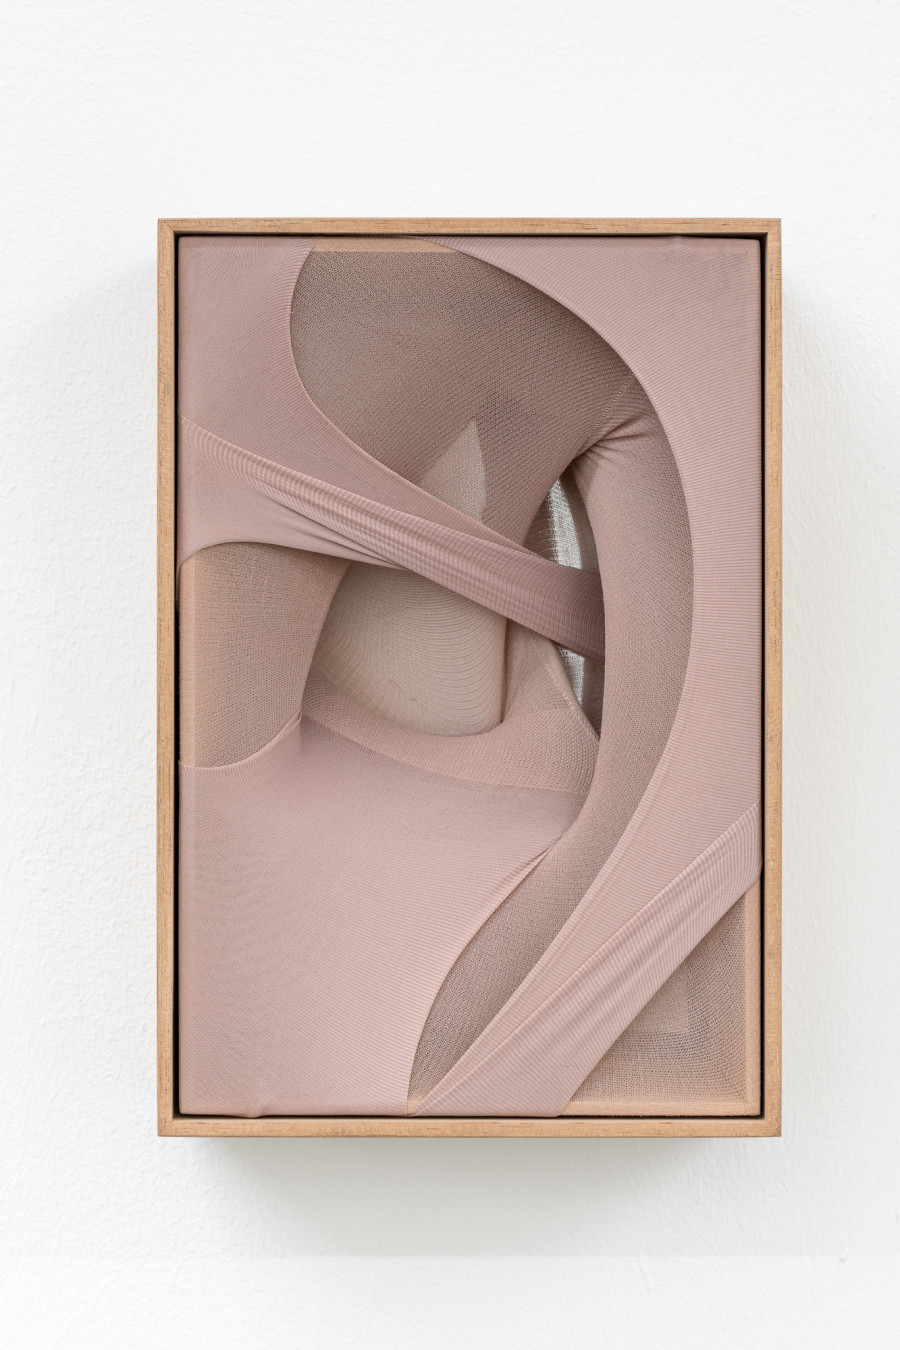 Martín Soto Climént, Gossip Secret Melody, 2022, tights and plexiglass mirror mounted in red cedar wood box, 31 x 21 x 10 cm. Photo: Kilian Bannwart